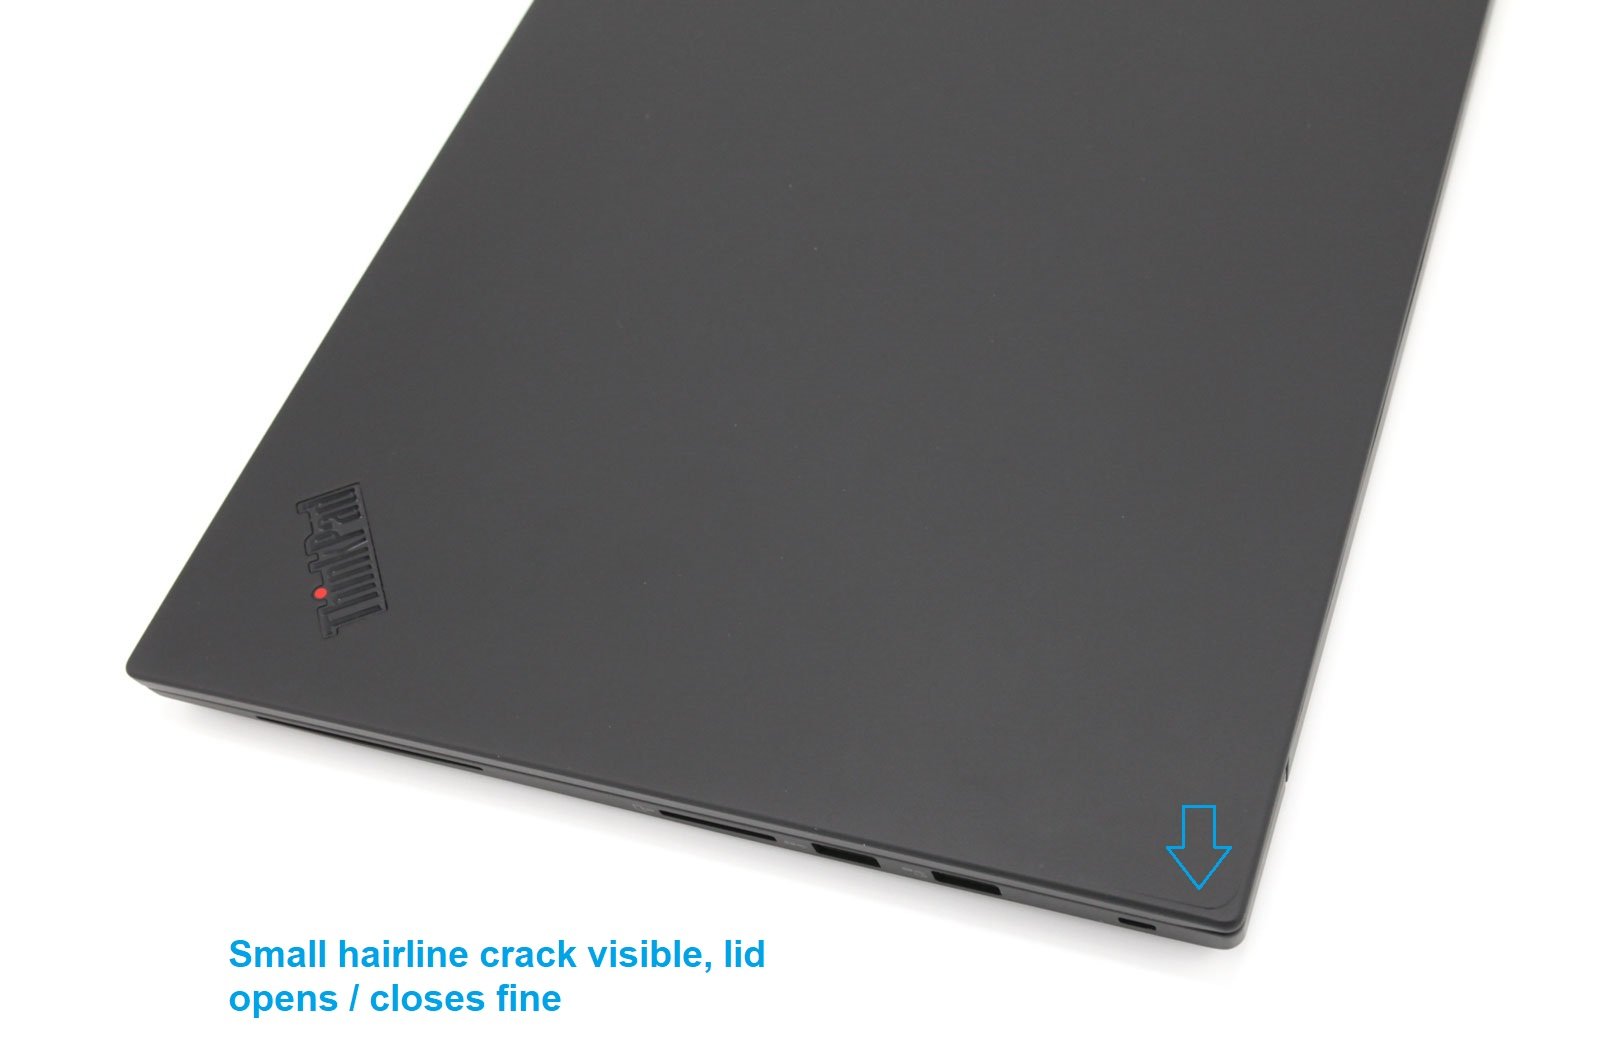 Lenovo ThinkPad X1 Extreme Laptop: 6-Core i7-8750H 16GB RAM, 512GB SSD, 1050 Ti - CruiseTech